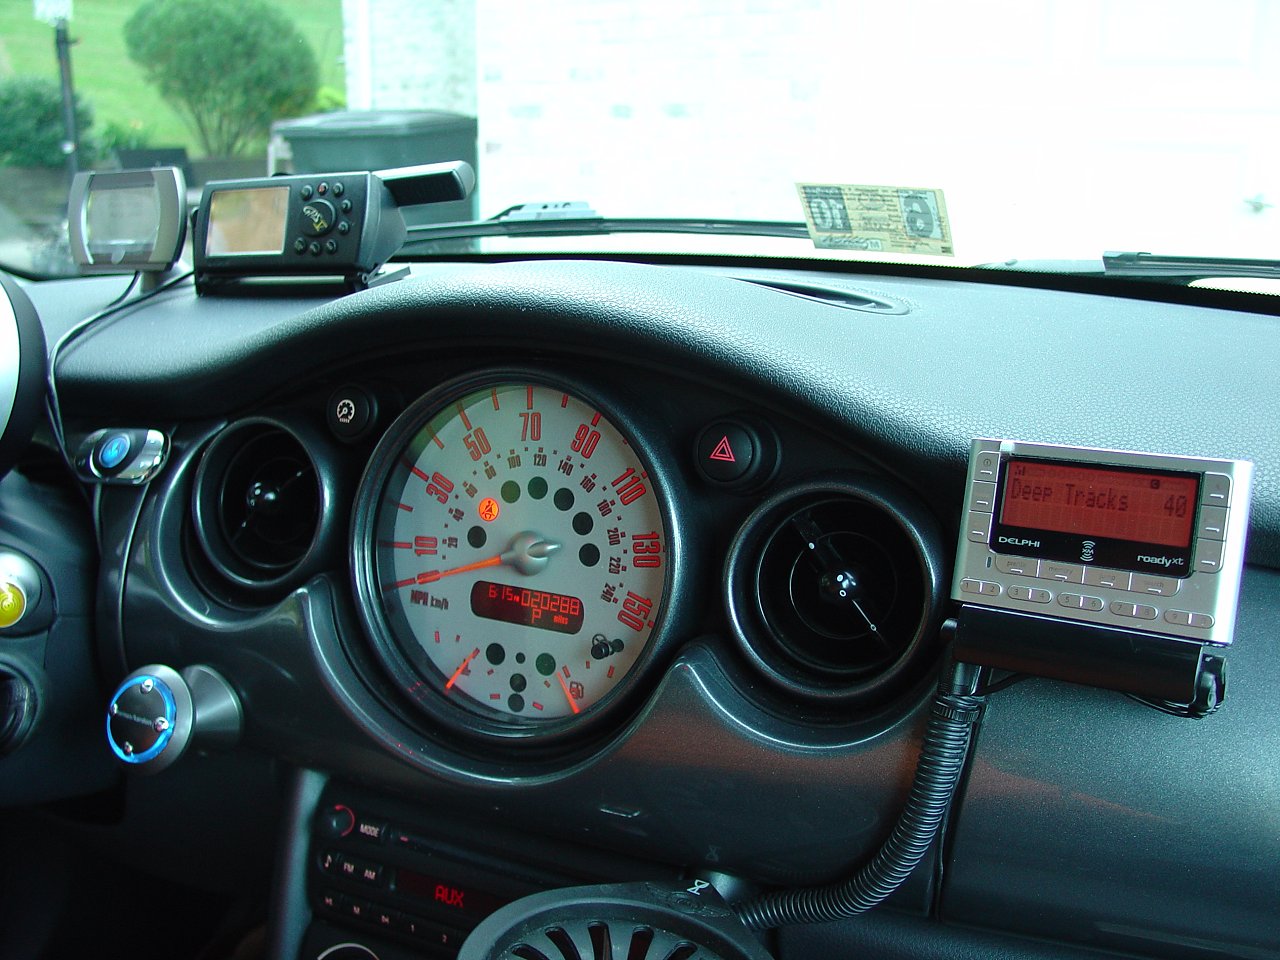 MINI Cooper - iPod Controller, GPS, Hands-Free Bluetooth, XM Radio